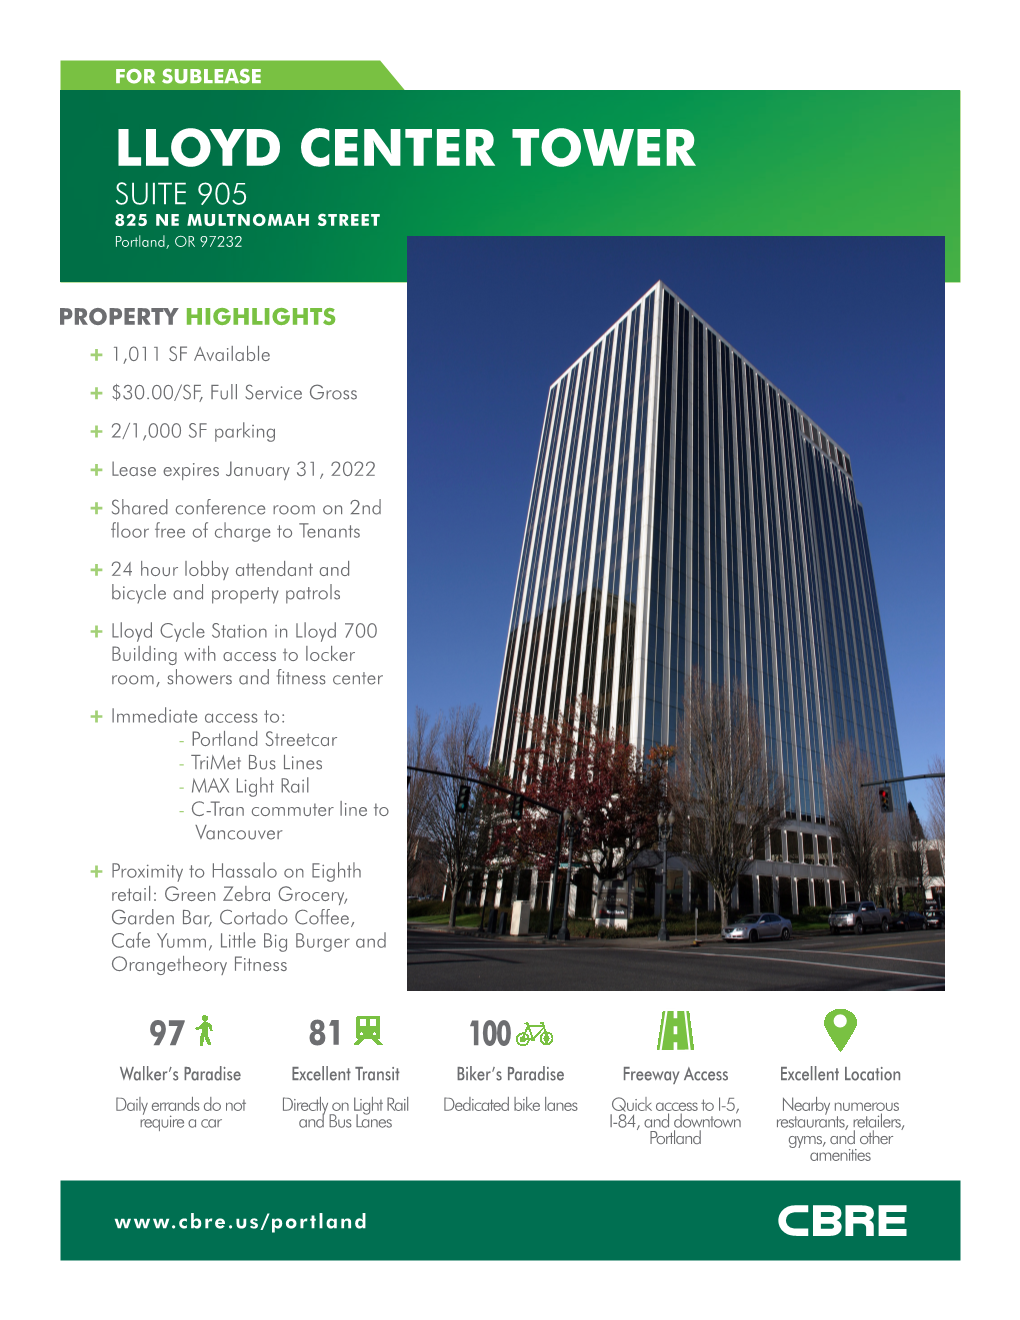 LLOYD CENTER TOWER SUITE 905 825 NE MULTNOMAH STREET Portland, OR 97232